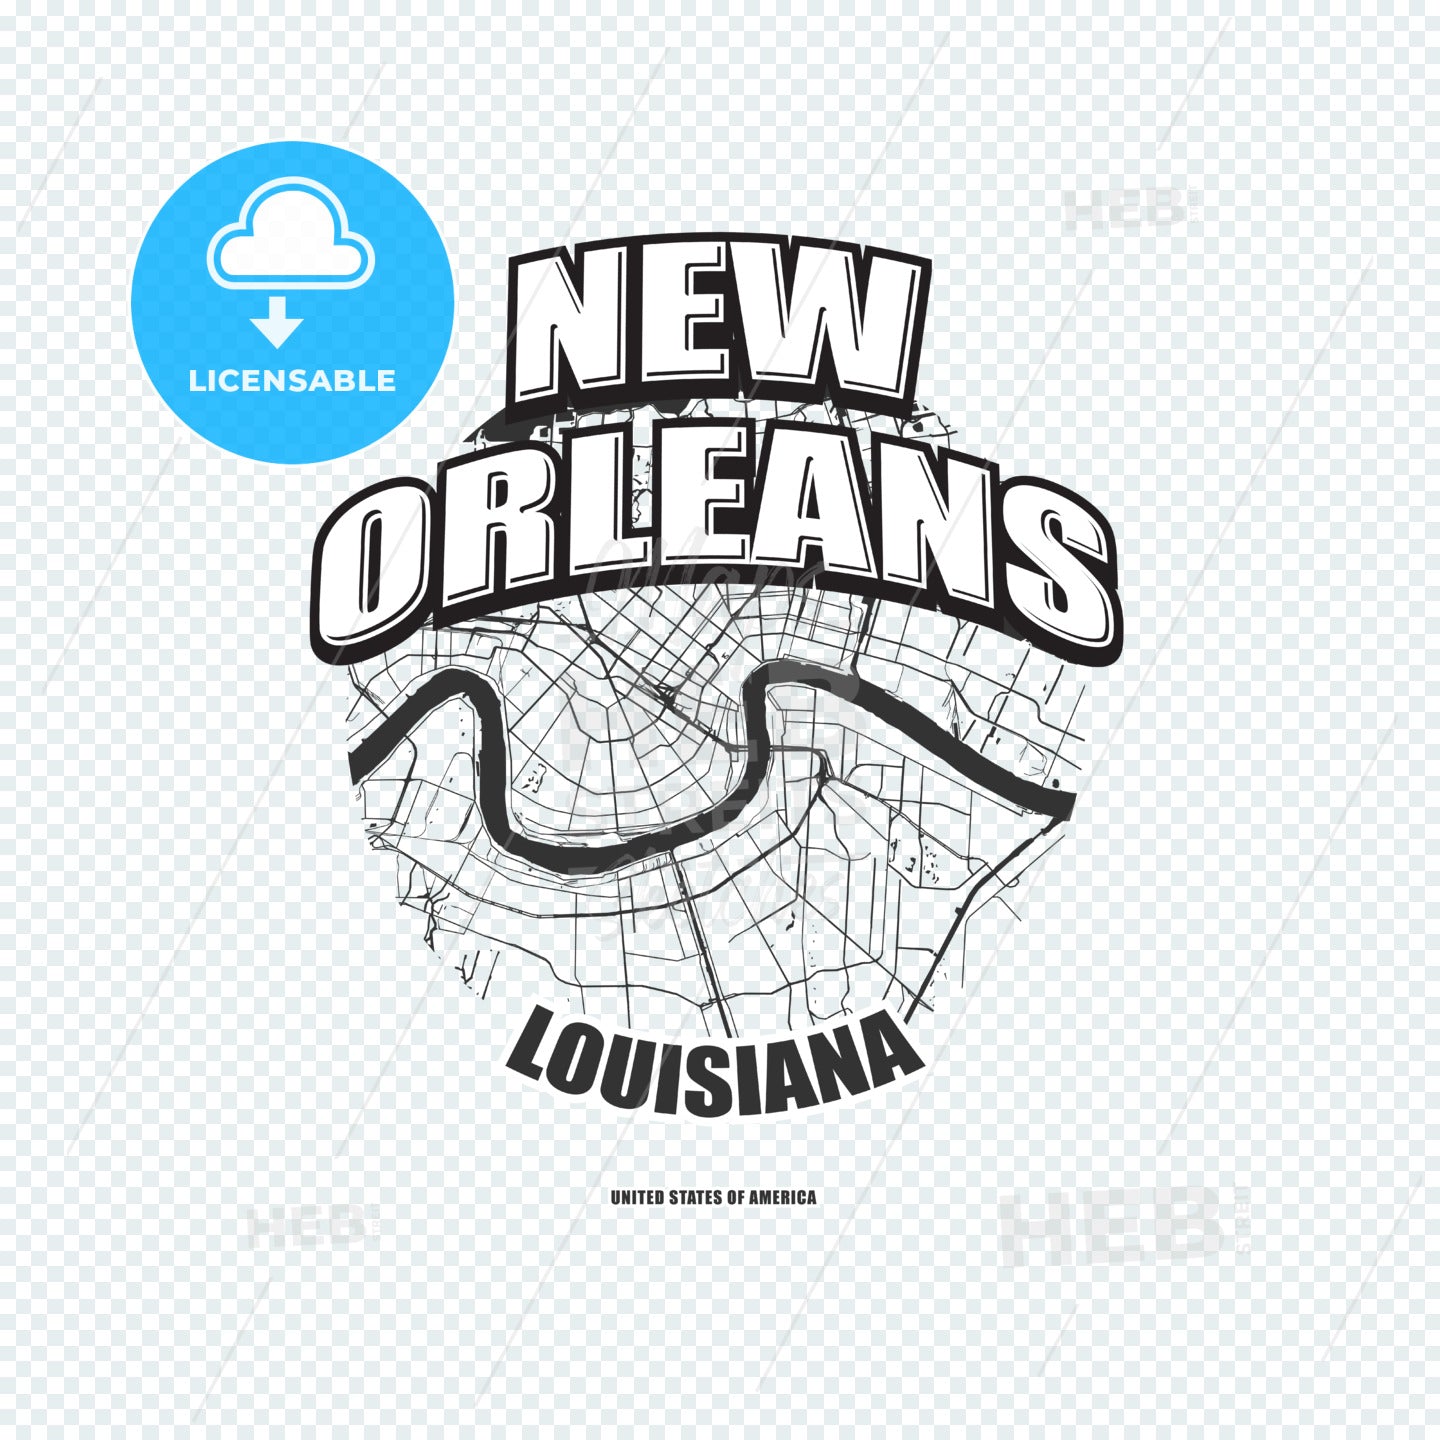 New Orleans, Louisiana, logo artwork – instant download